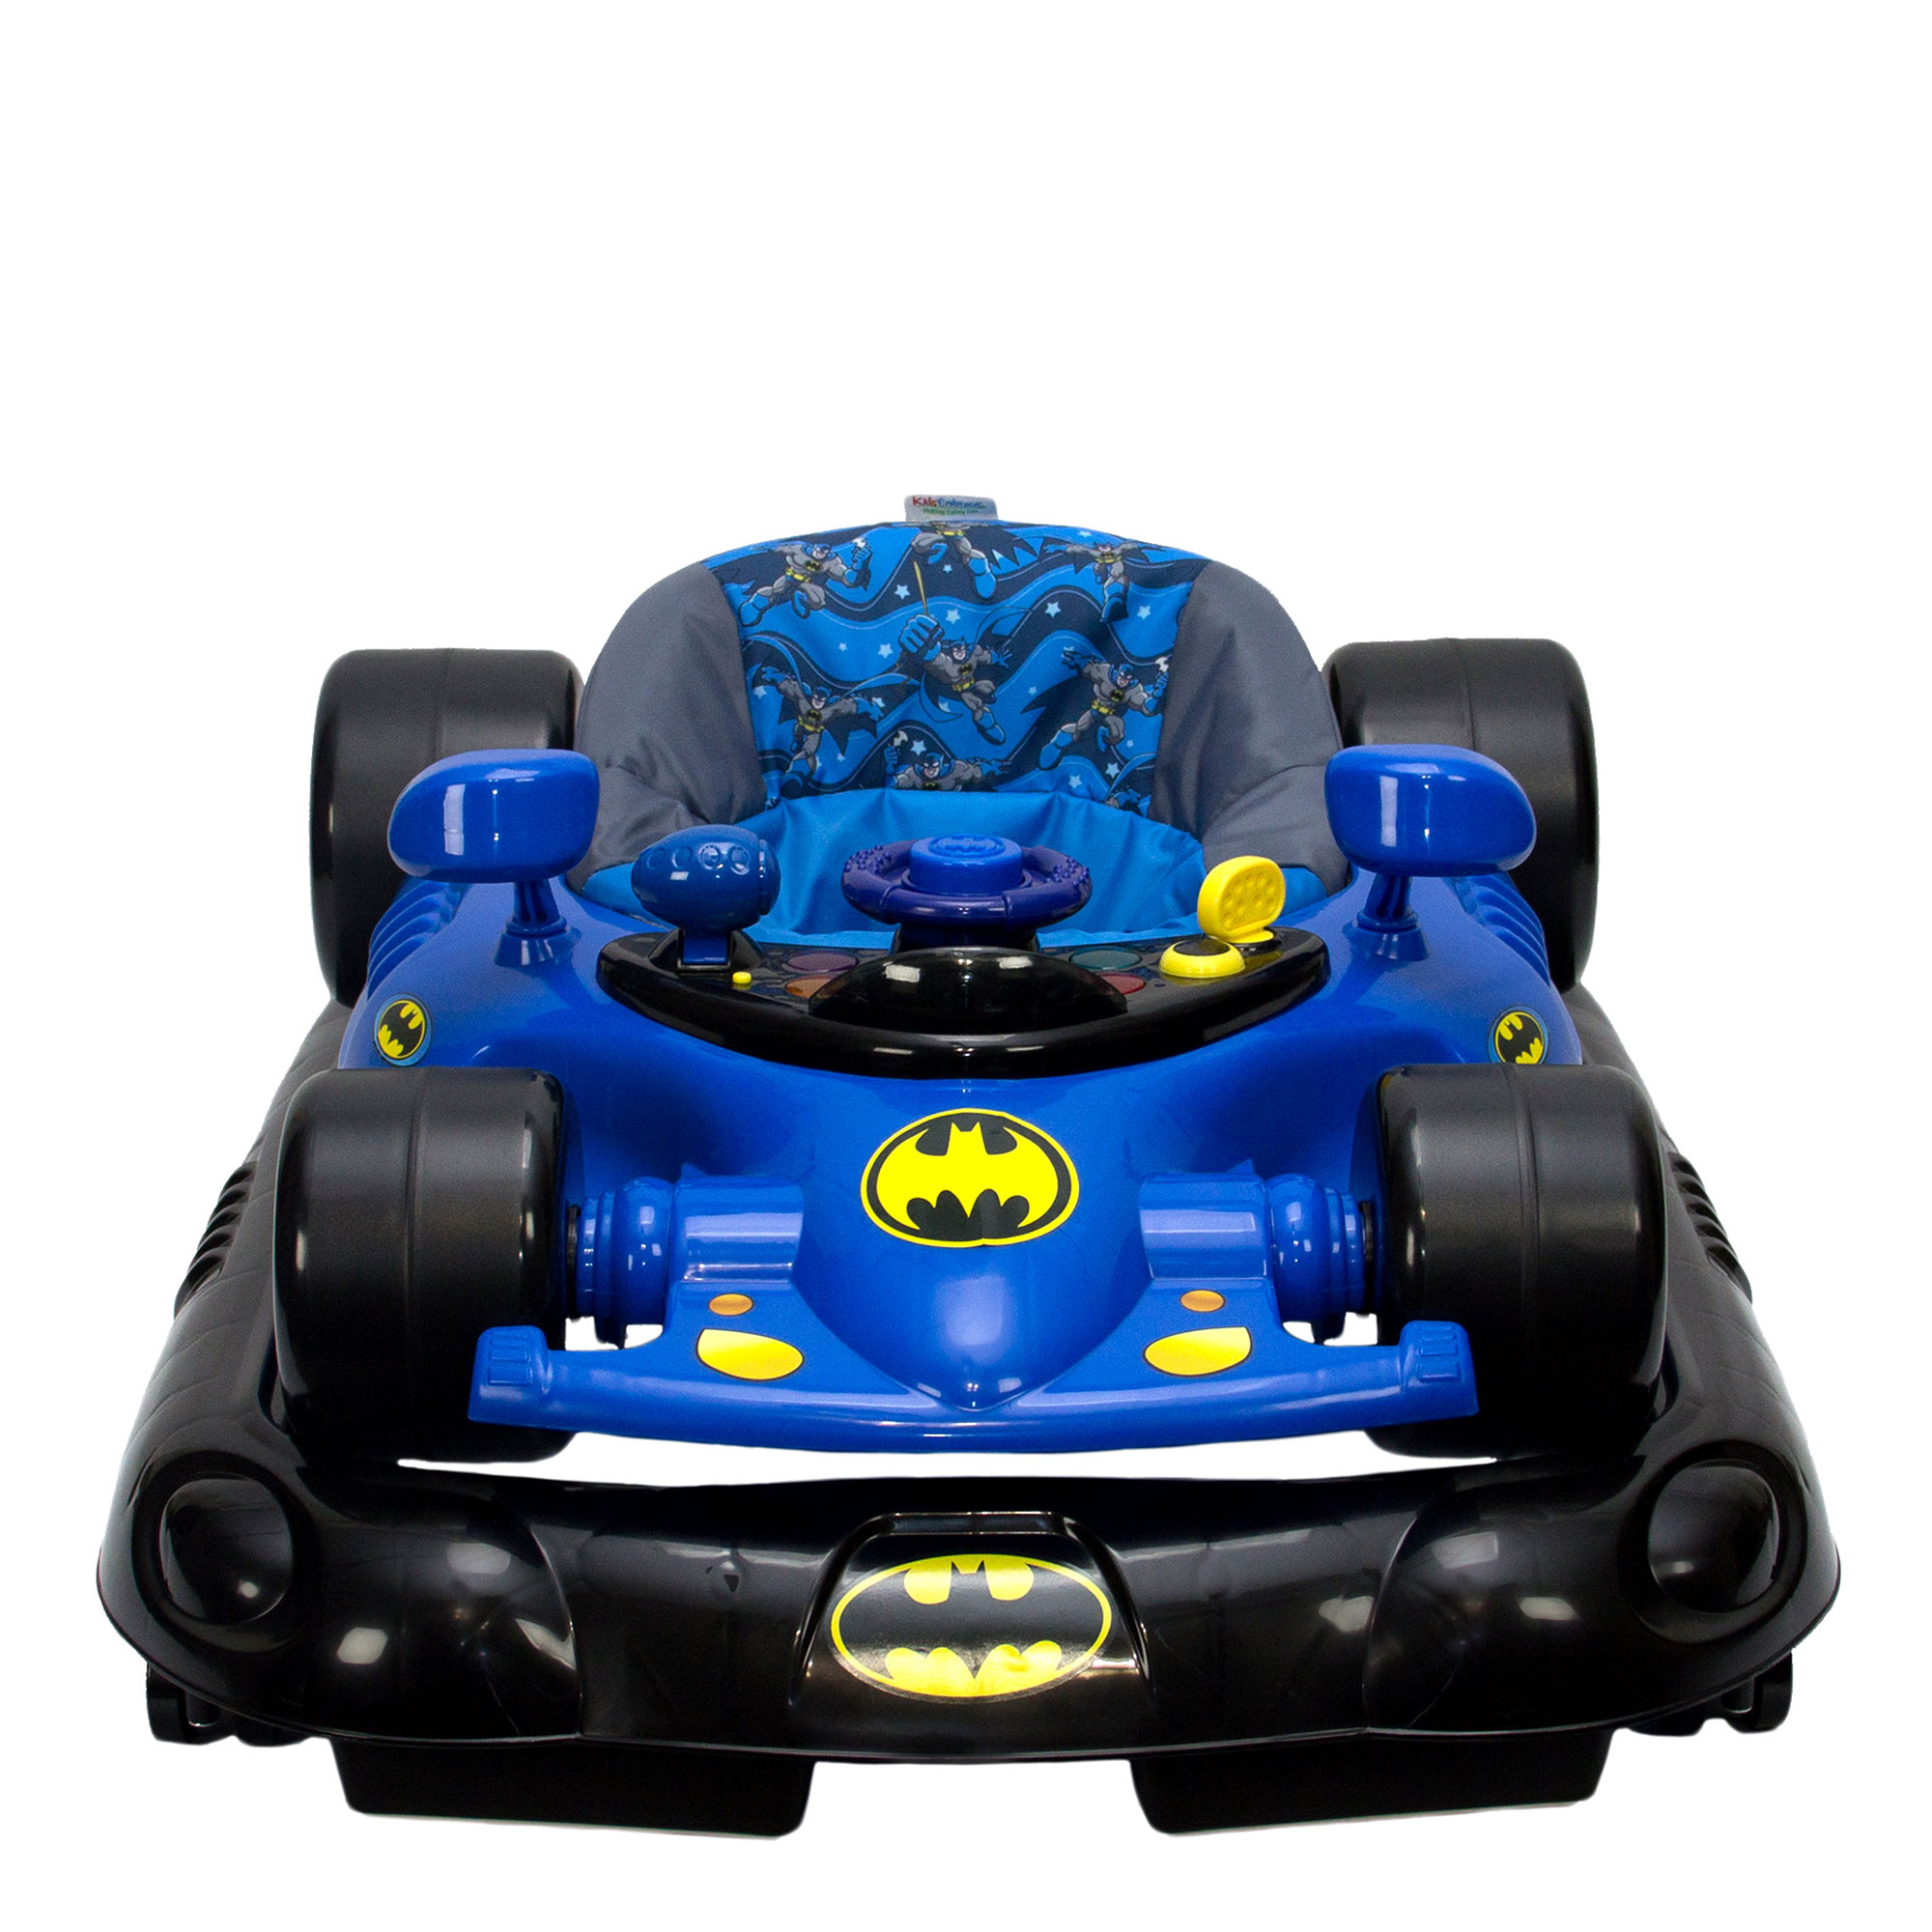 KidsEmbrace Batman Baby Activity Station Race Car Walker with Lights - image 3 of 9